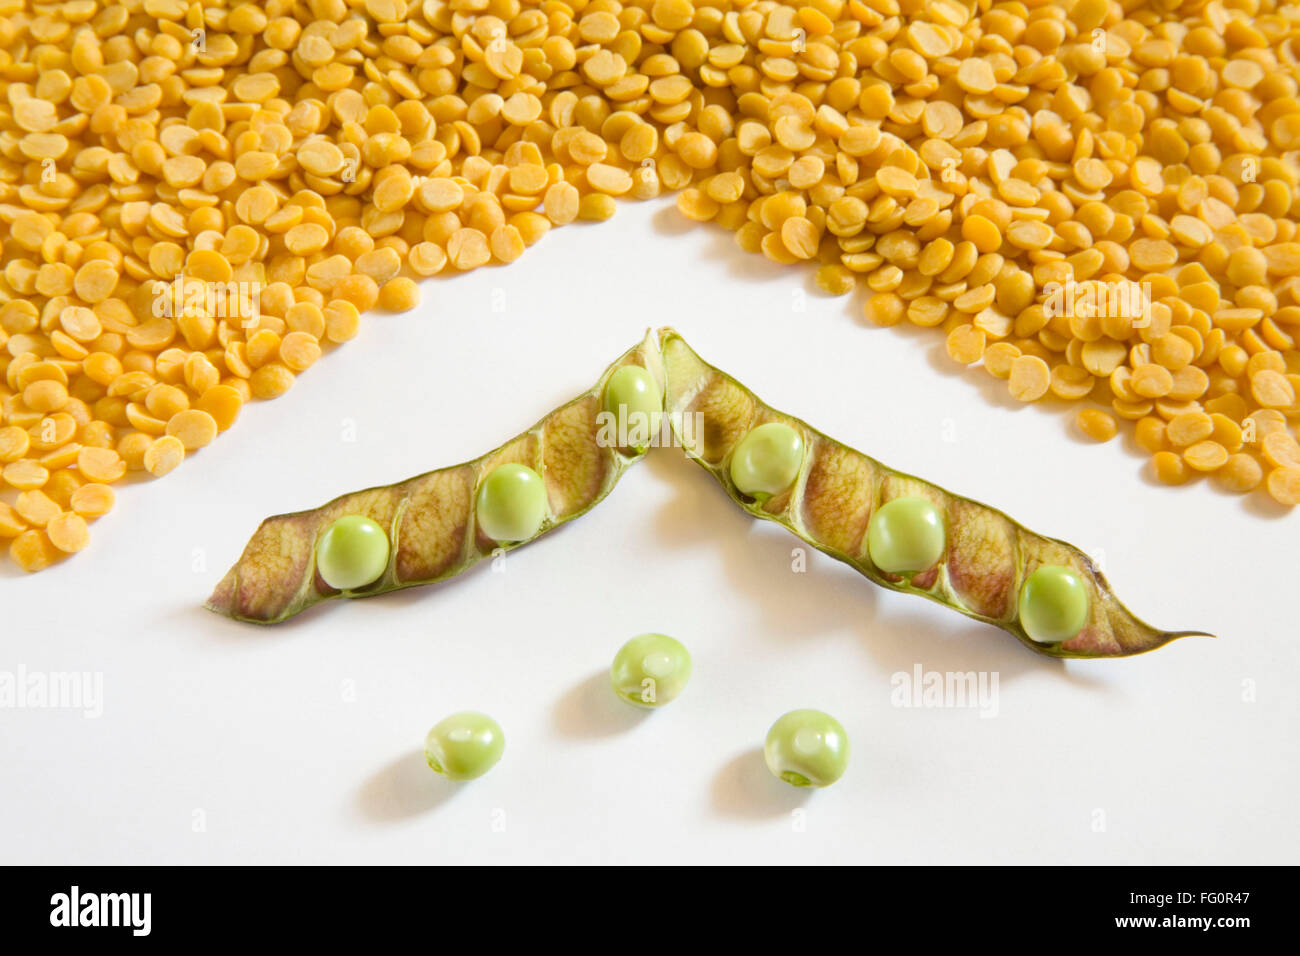 Grain , fresh green and yellow split lentils toor arhar dal lens culinaris with open peapod Stock Photo